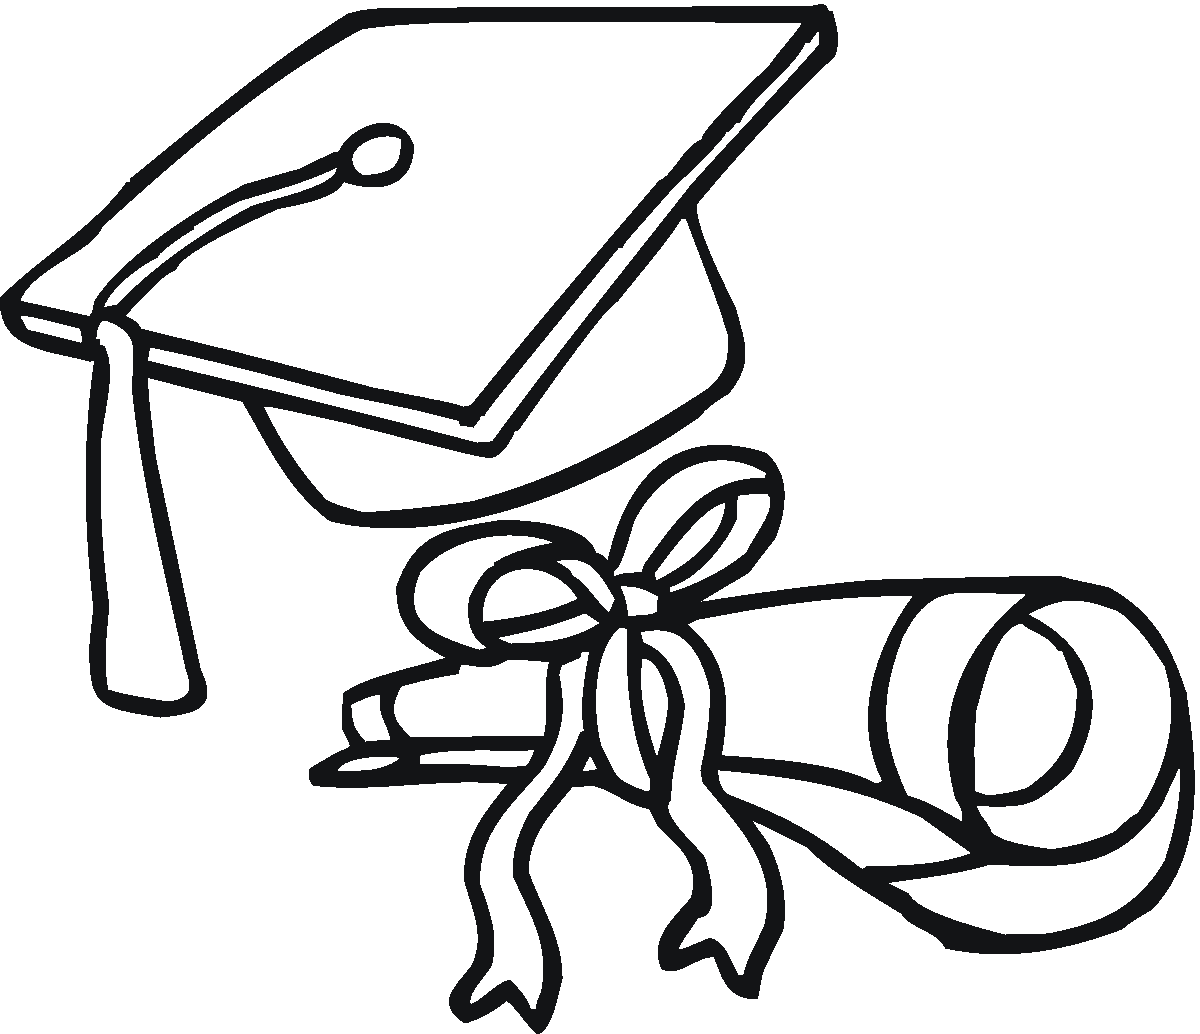 graduation-cap-coloring-page-printable